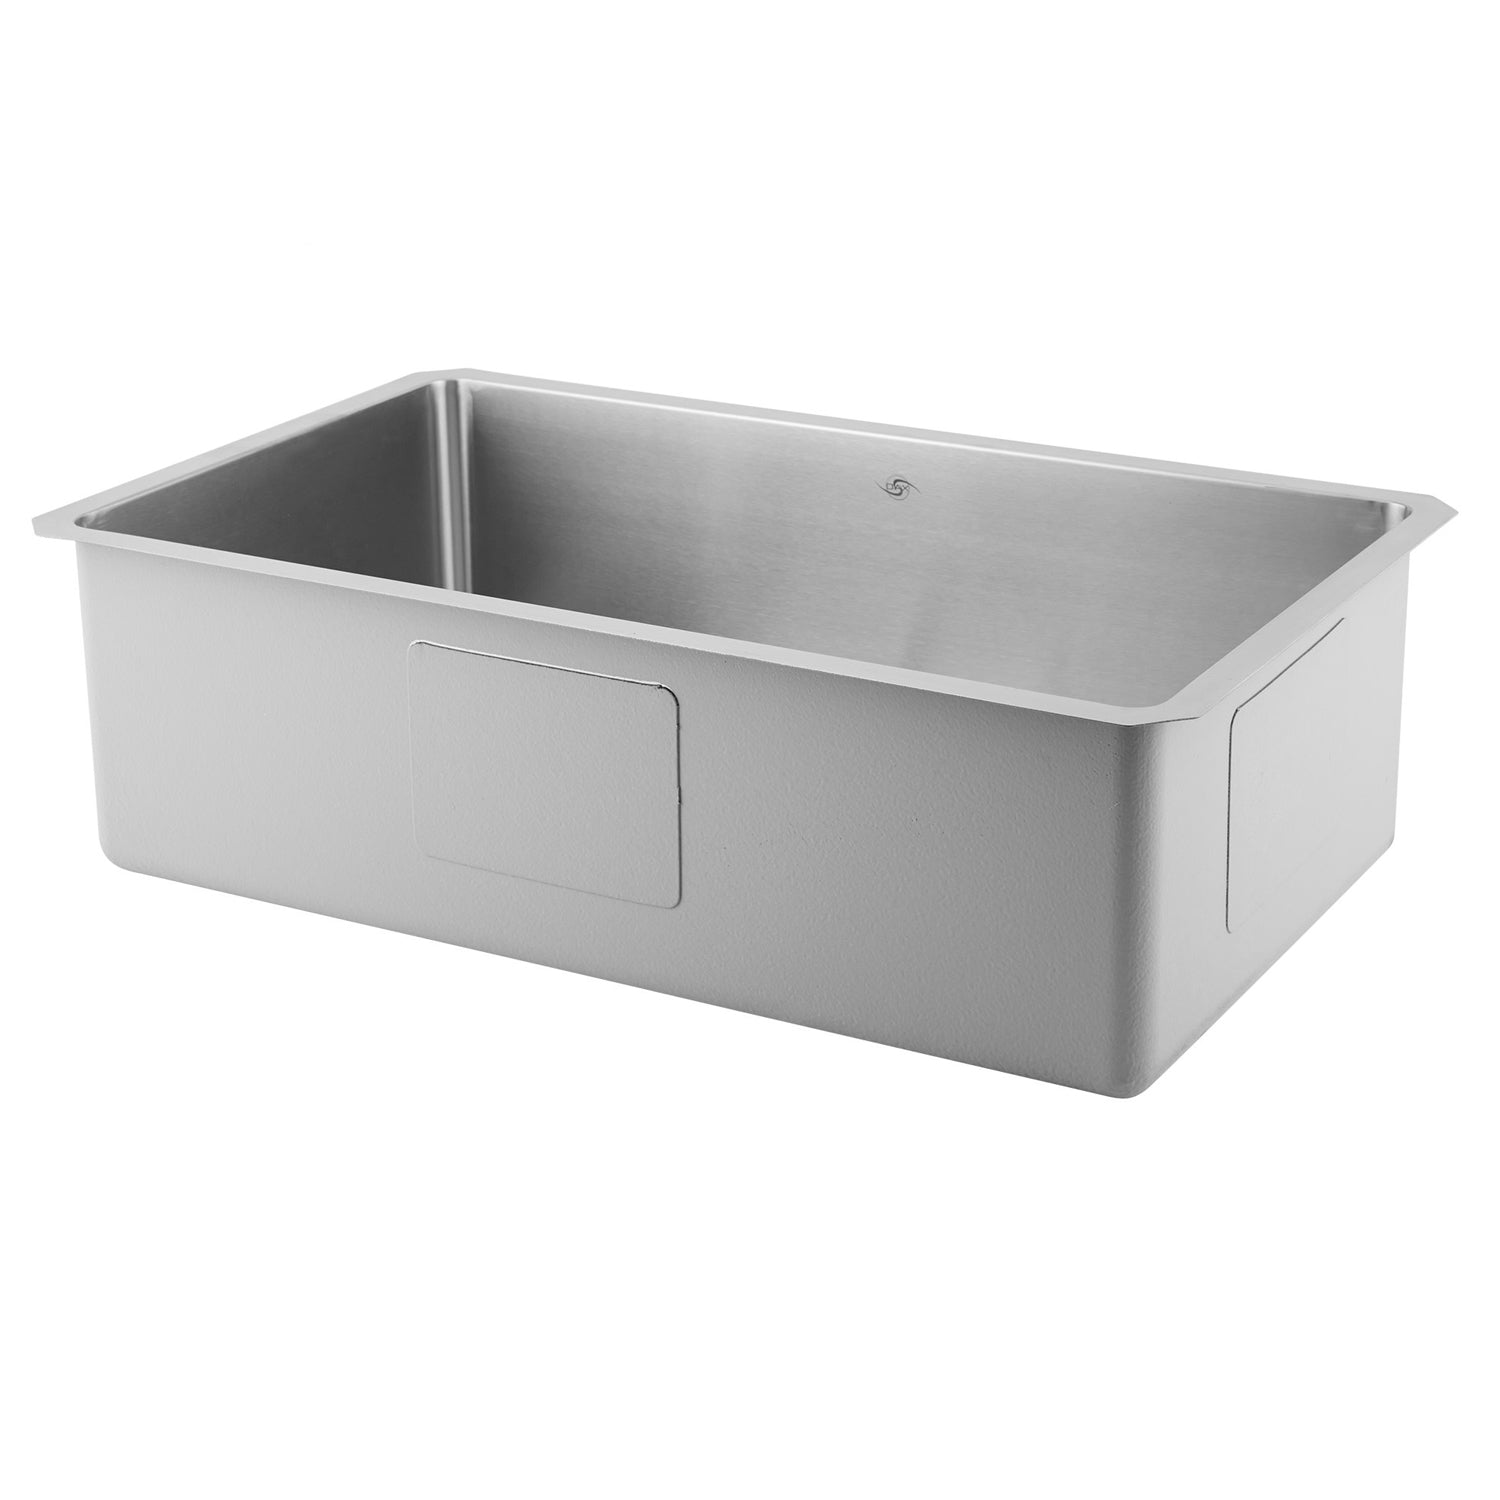 DAX Single Bowl Undermount Kitchen Sink, 18 Gauge Stainless Steel, Brushed Finish , 30 x 18 x 9 Inches (DAX-3018B)